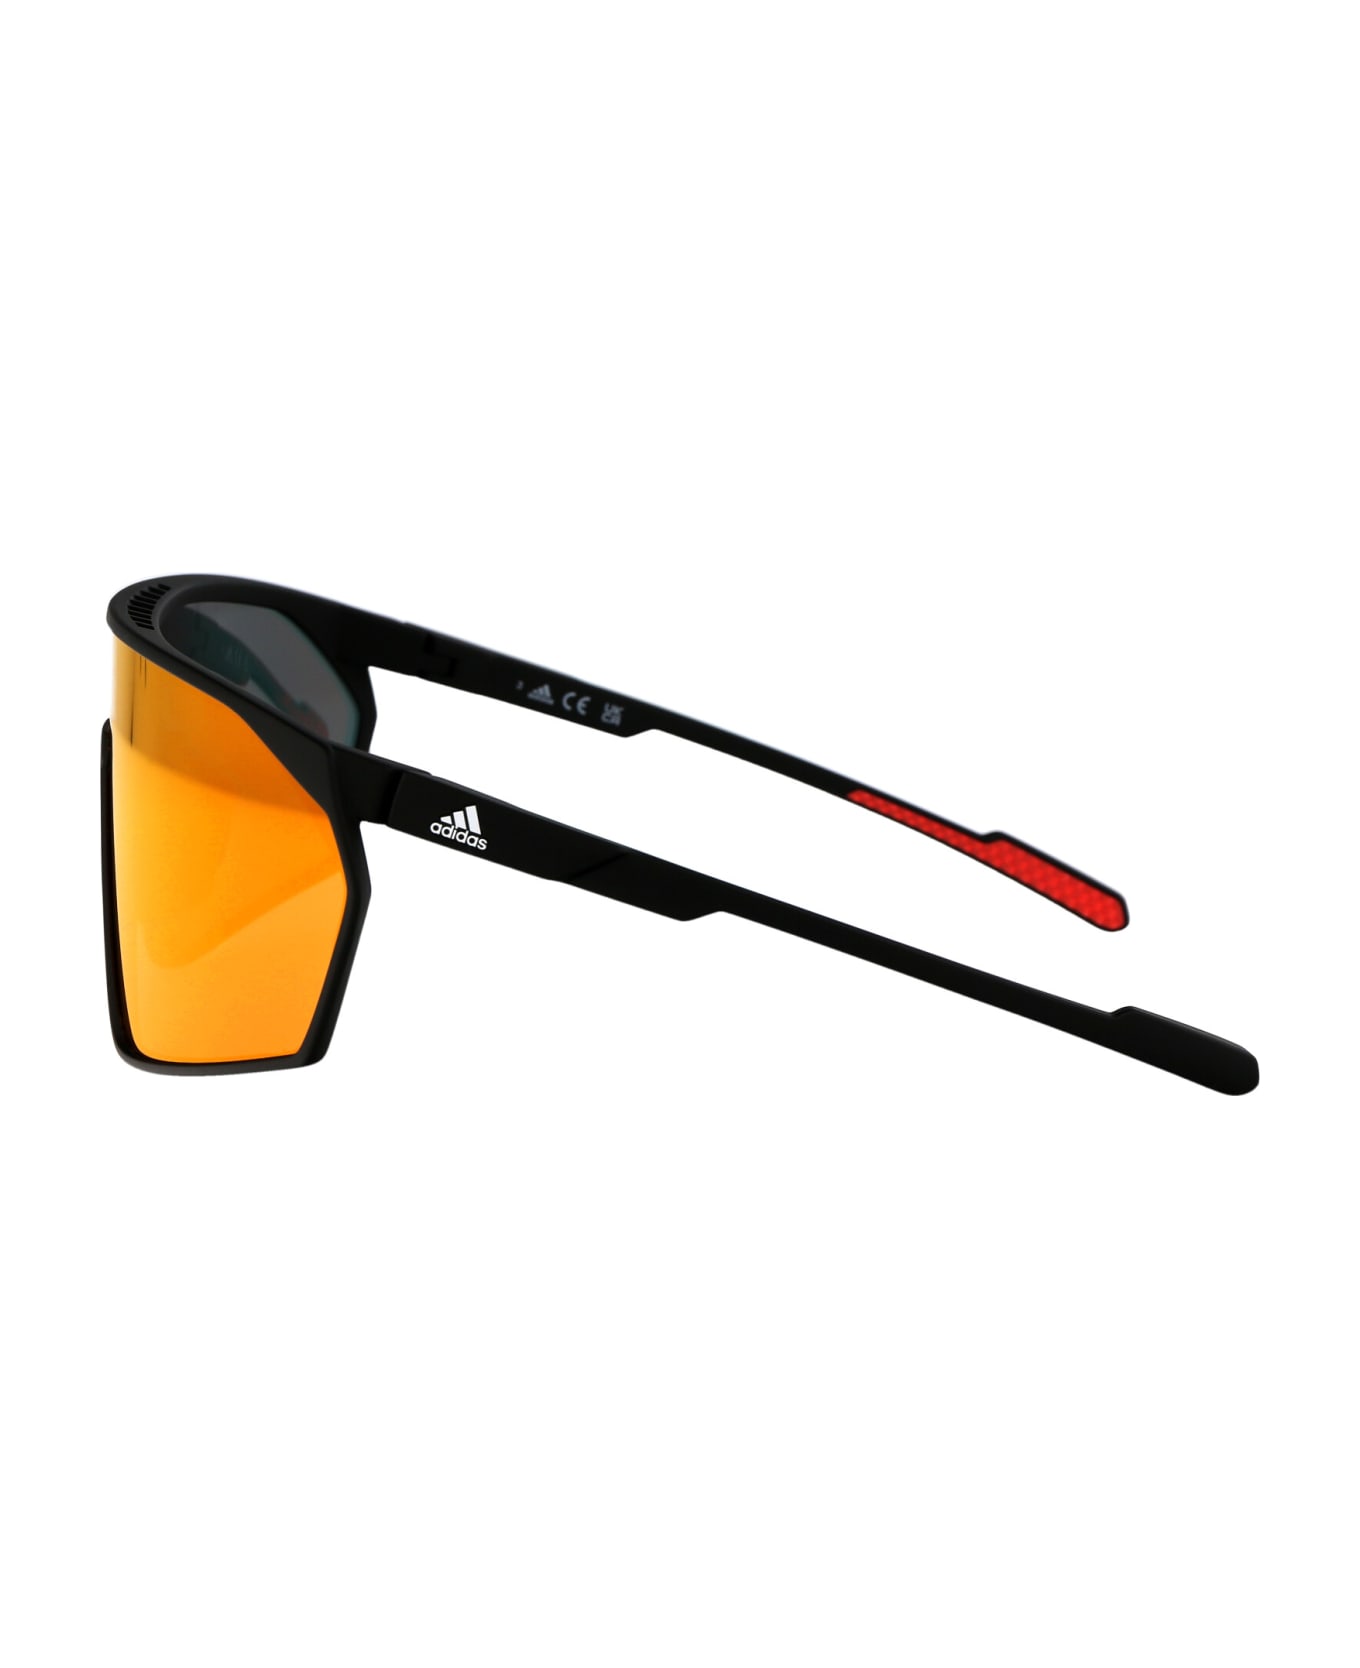 Adidas Prfm Shield Sunglasses - 02L Nero Opaco/Roviex Specchiato